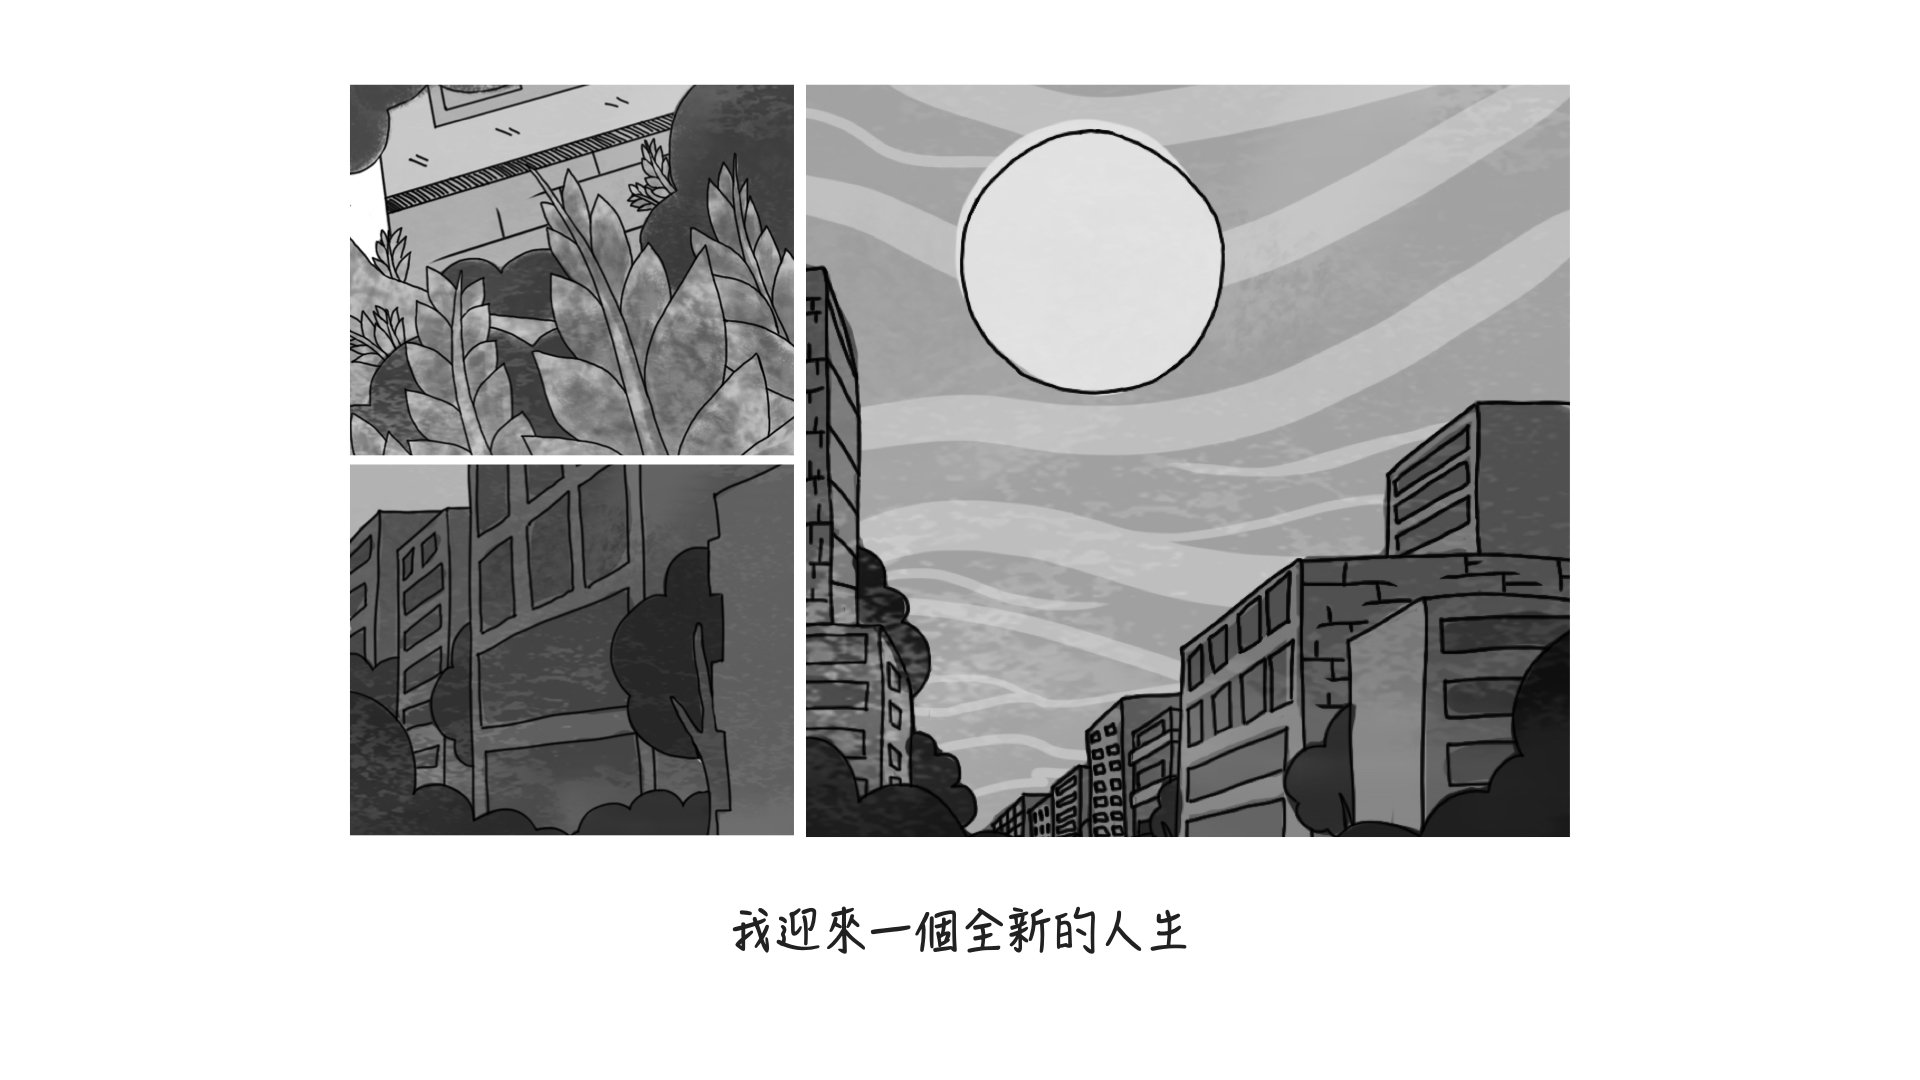 PP_Comic_Chinese_HK.009.jpeg